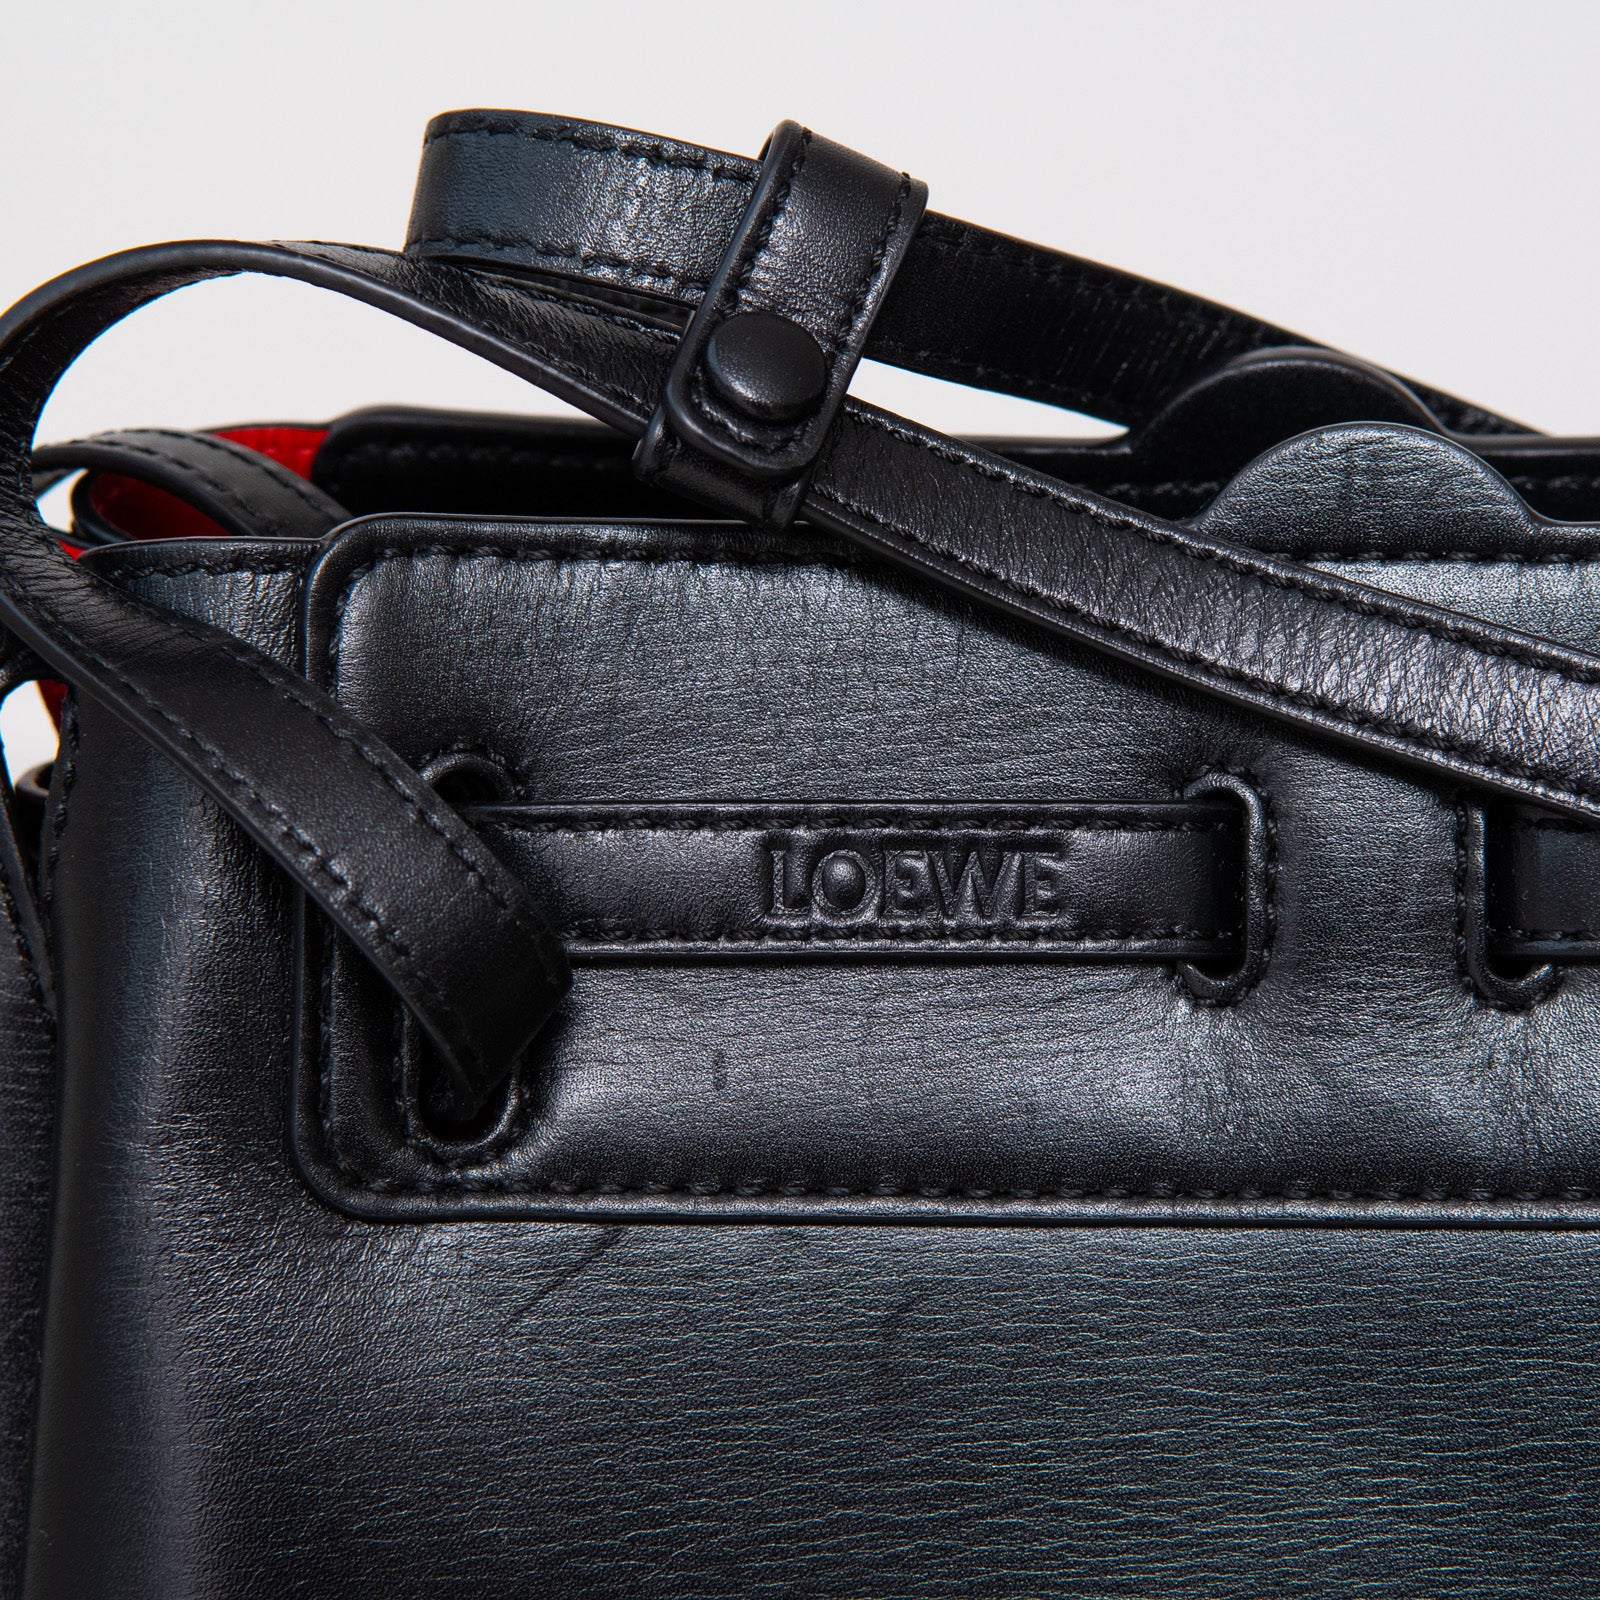 Loewe Lazo Black Leather Bag - Image 2 of 9